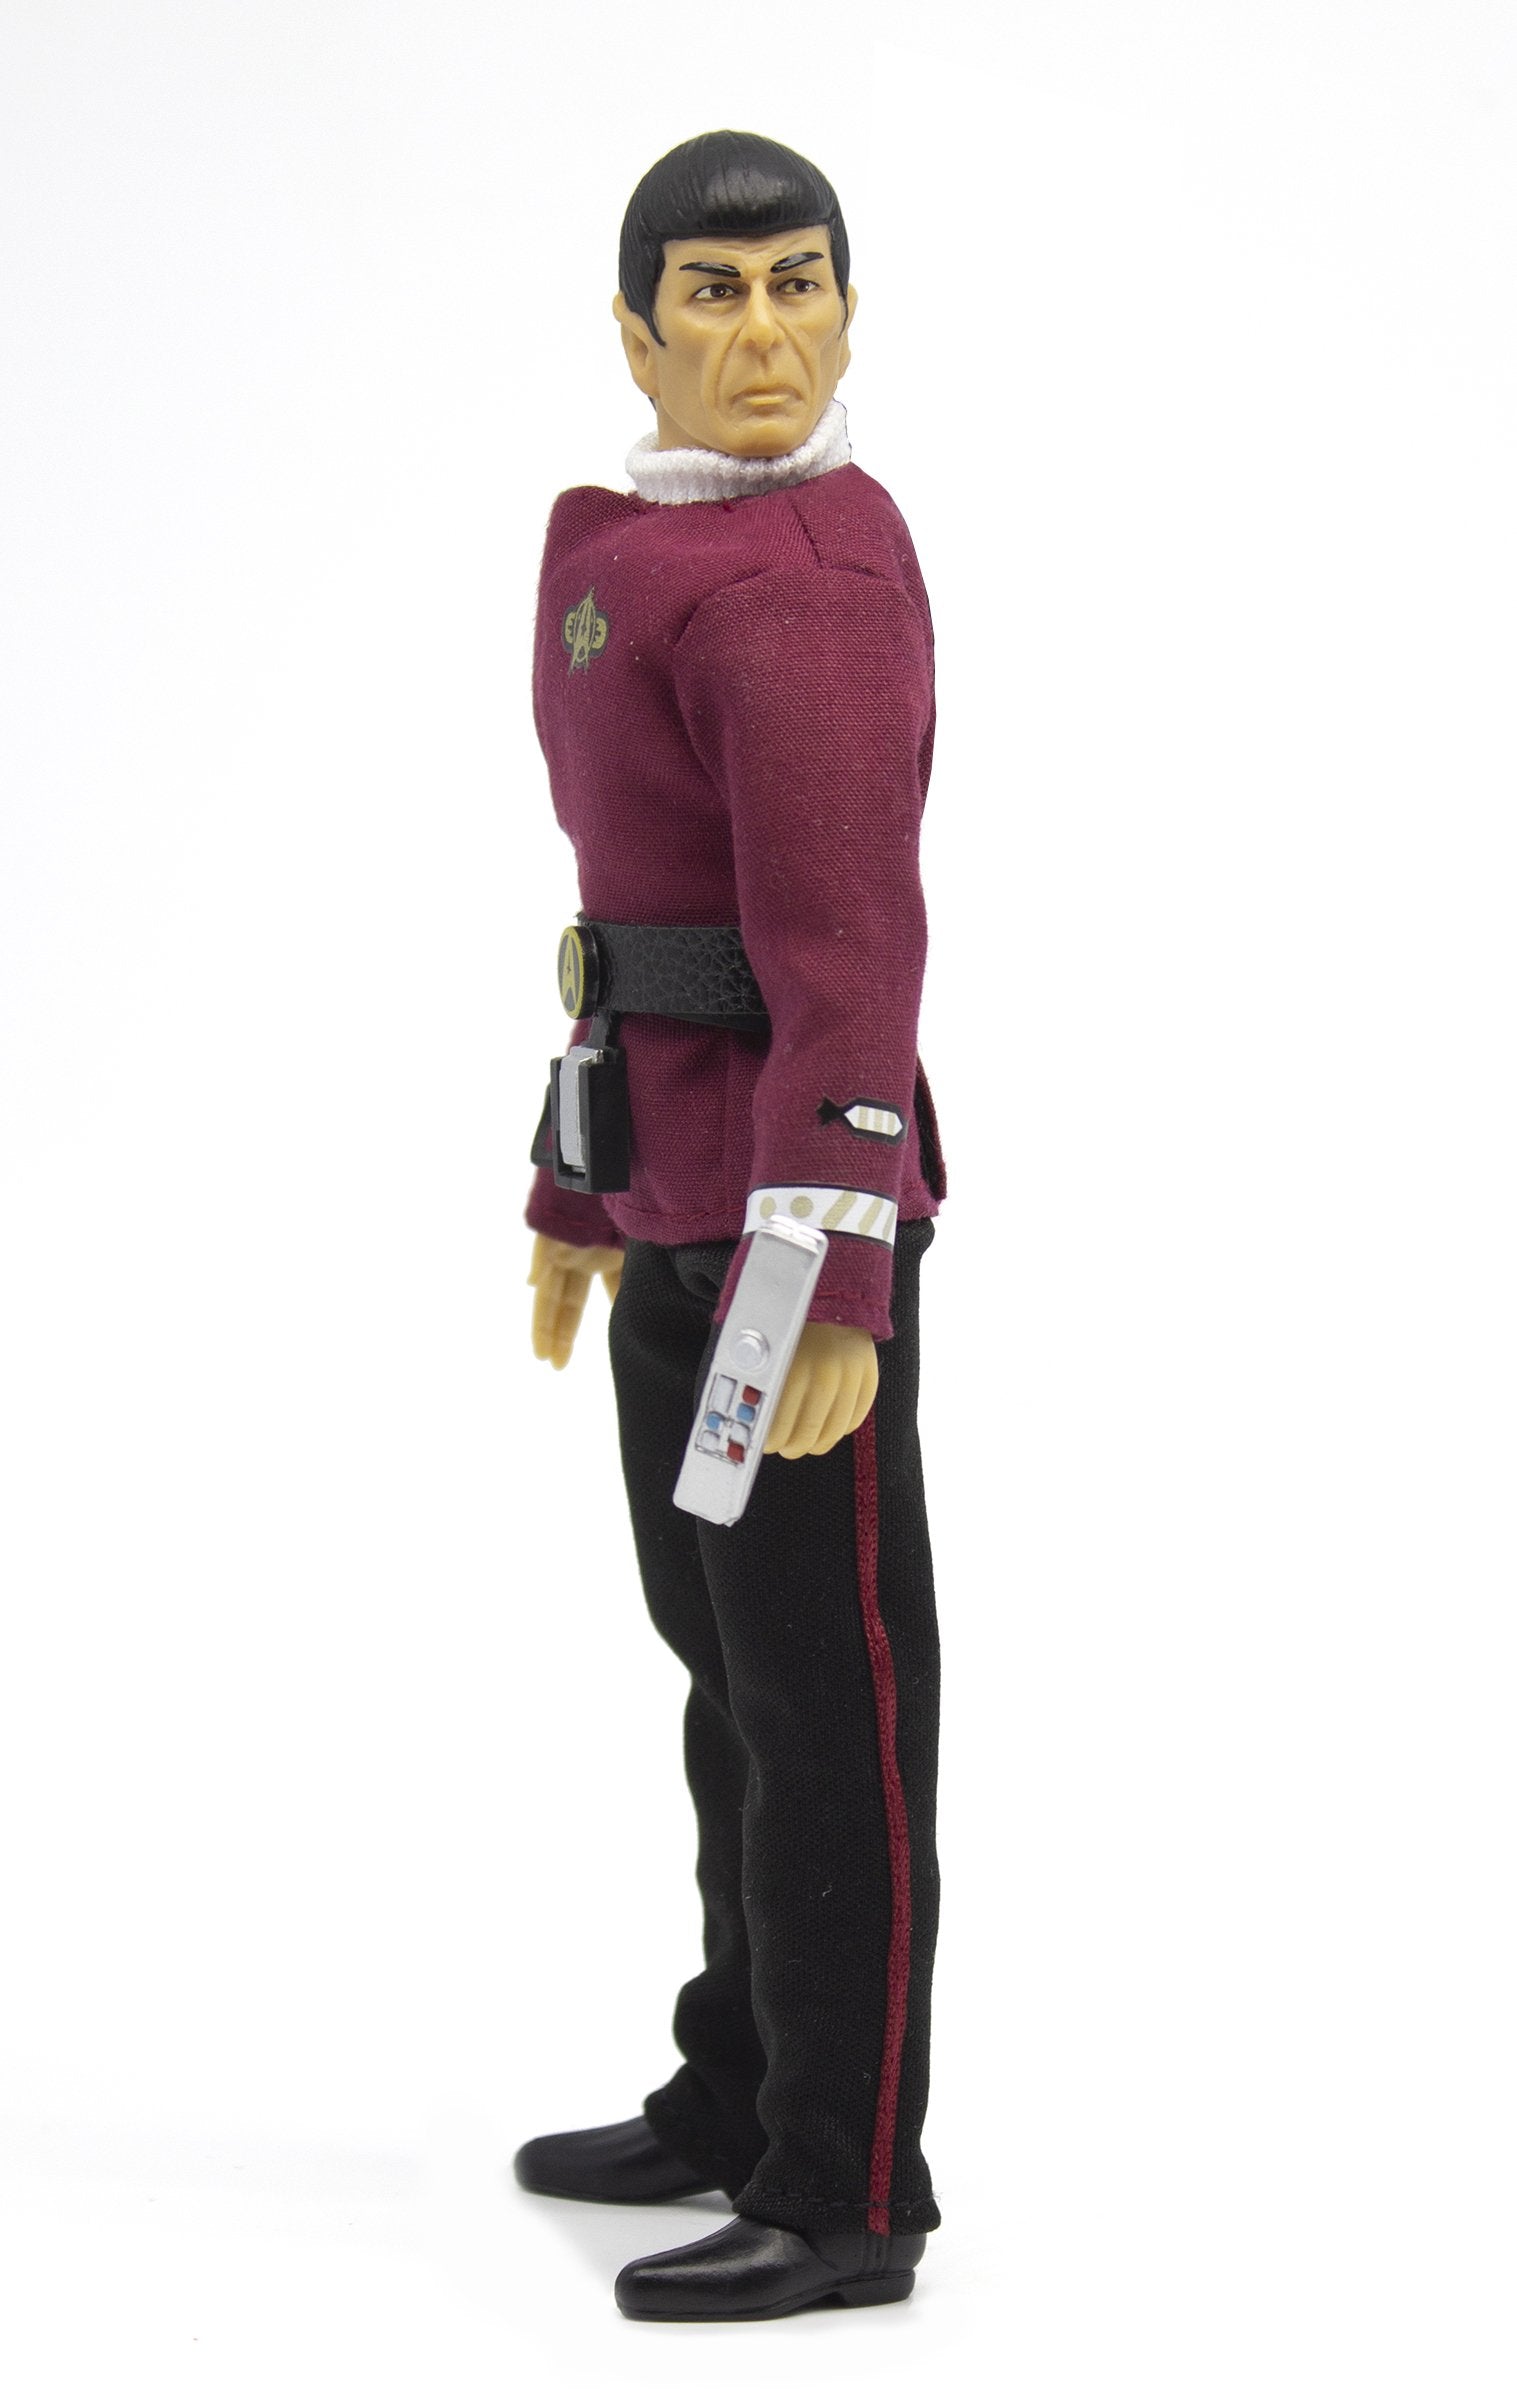 Mego Star Trek Wave 7 - Wrath of Khan - Captain Spock 8" Action Figure - Zlc Collectibles